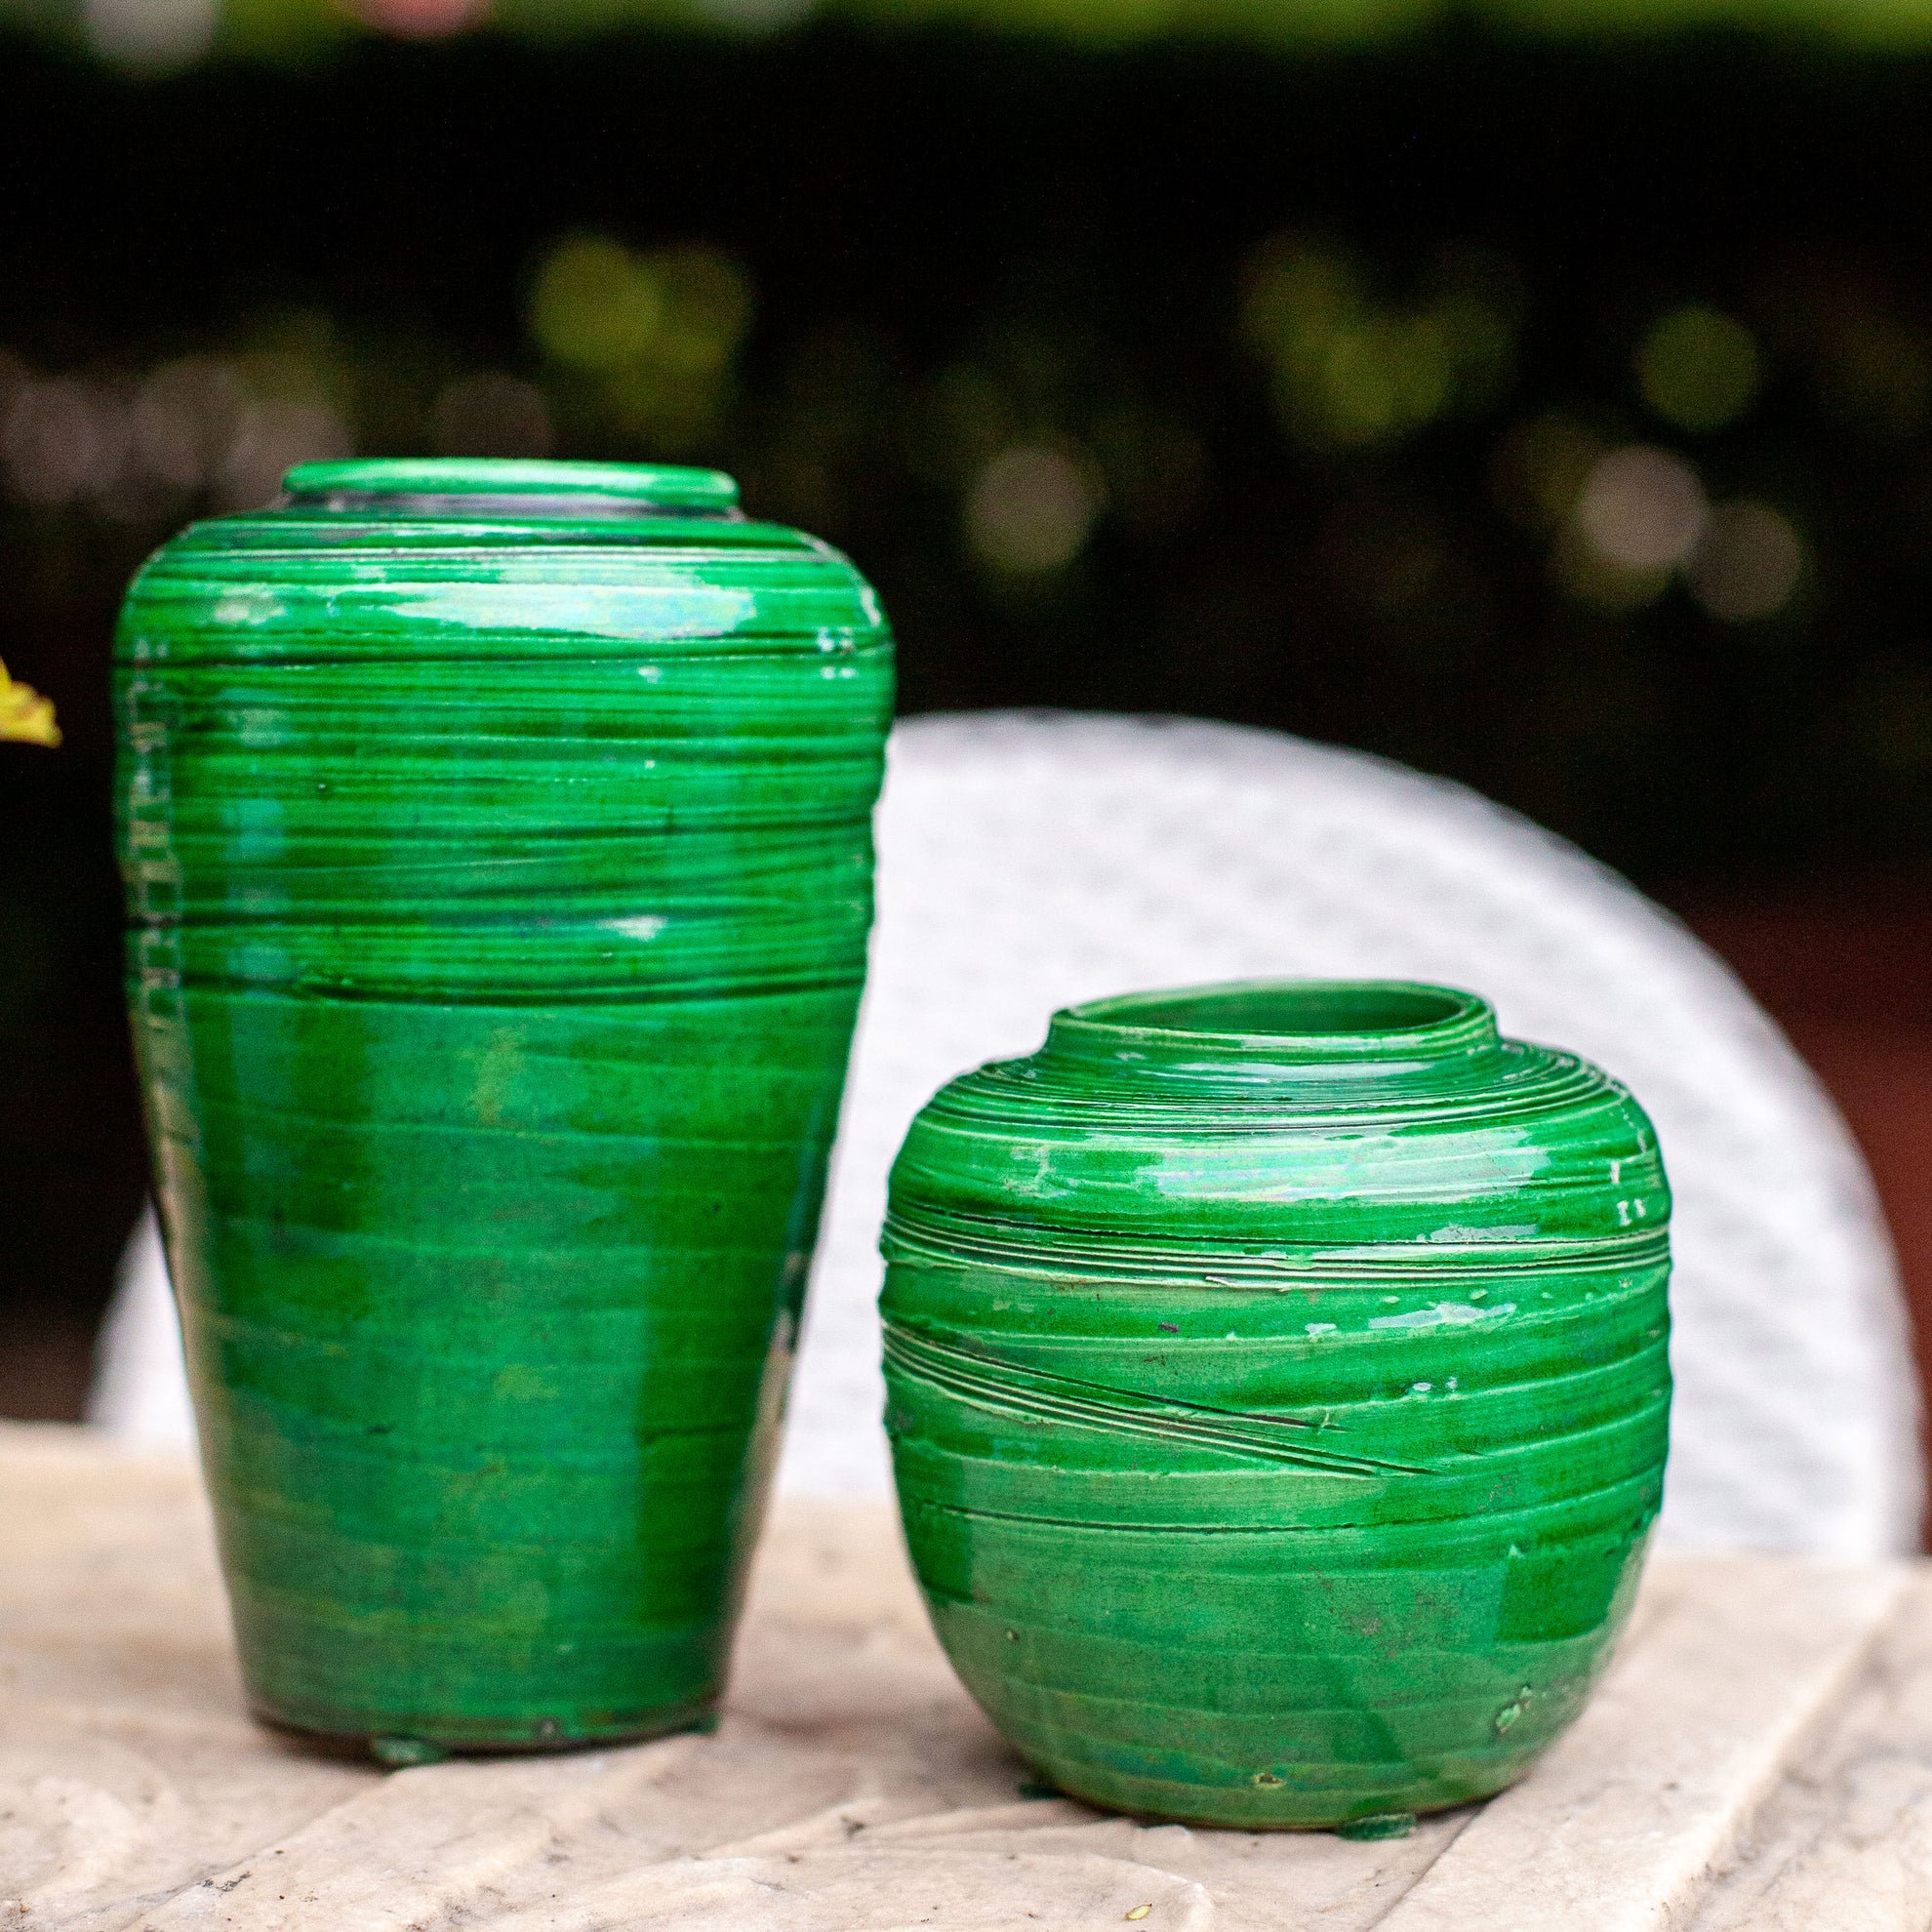 Awaji Swirled Patten Vases, set of 2